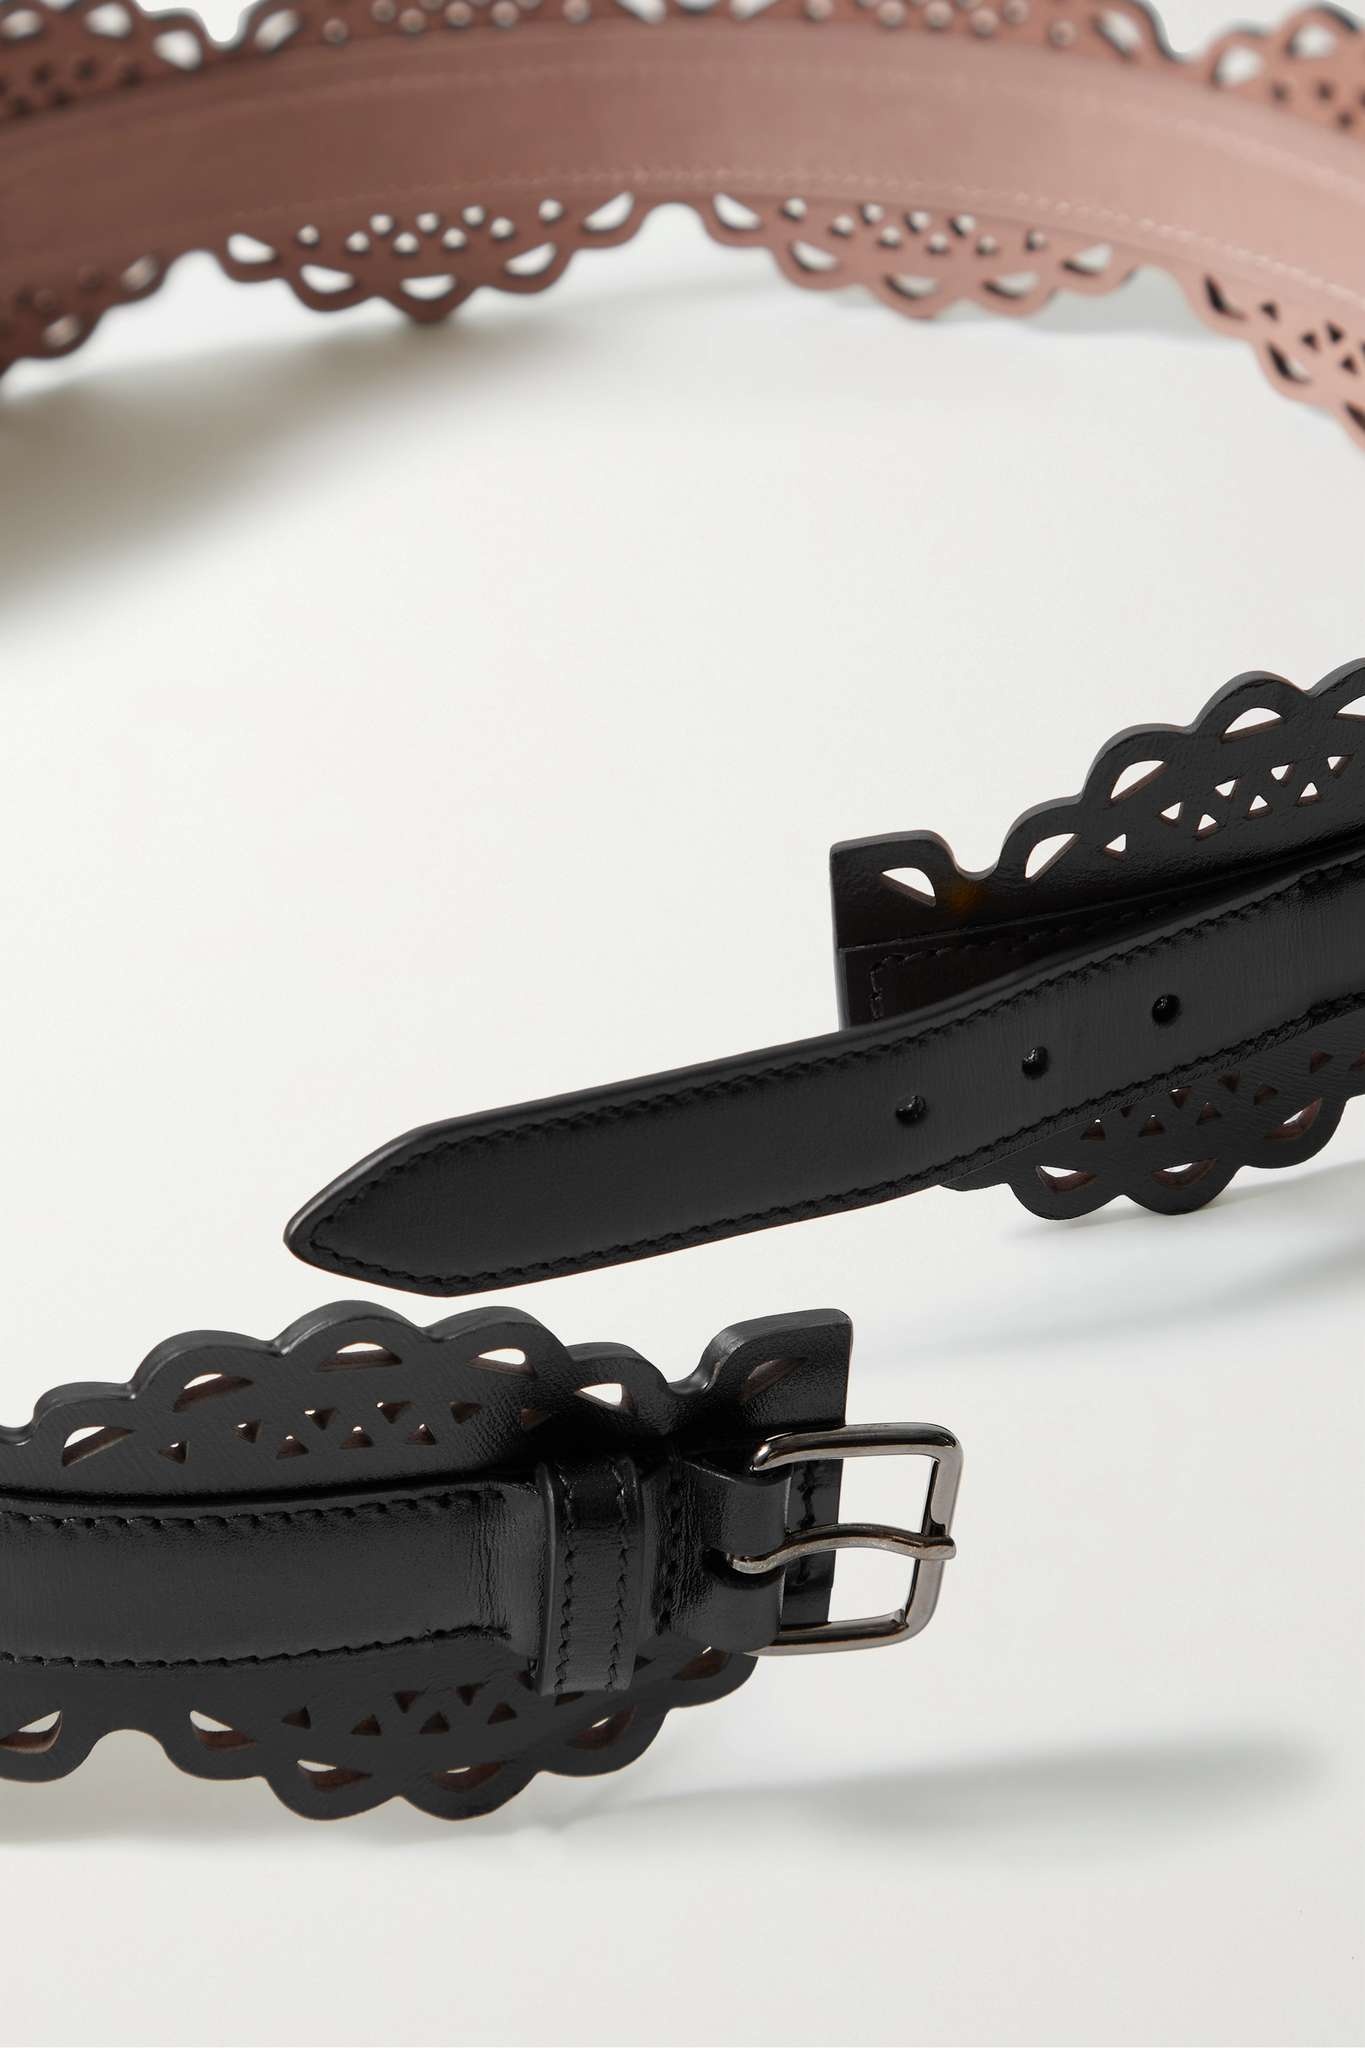 Laser-cut leather waist belt - 3